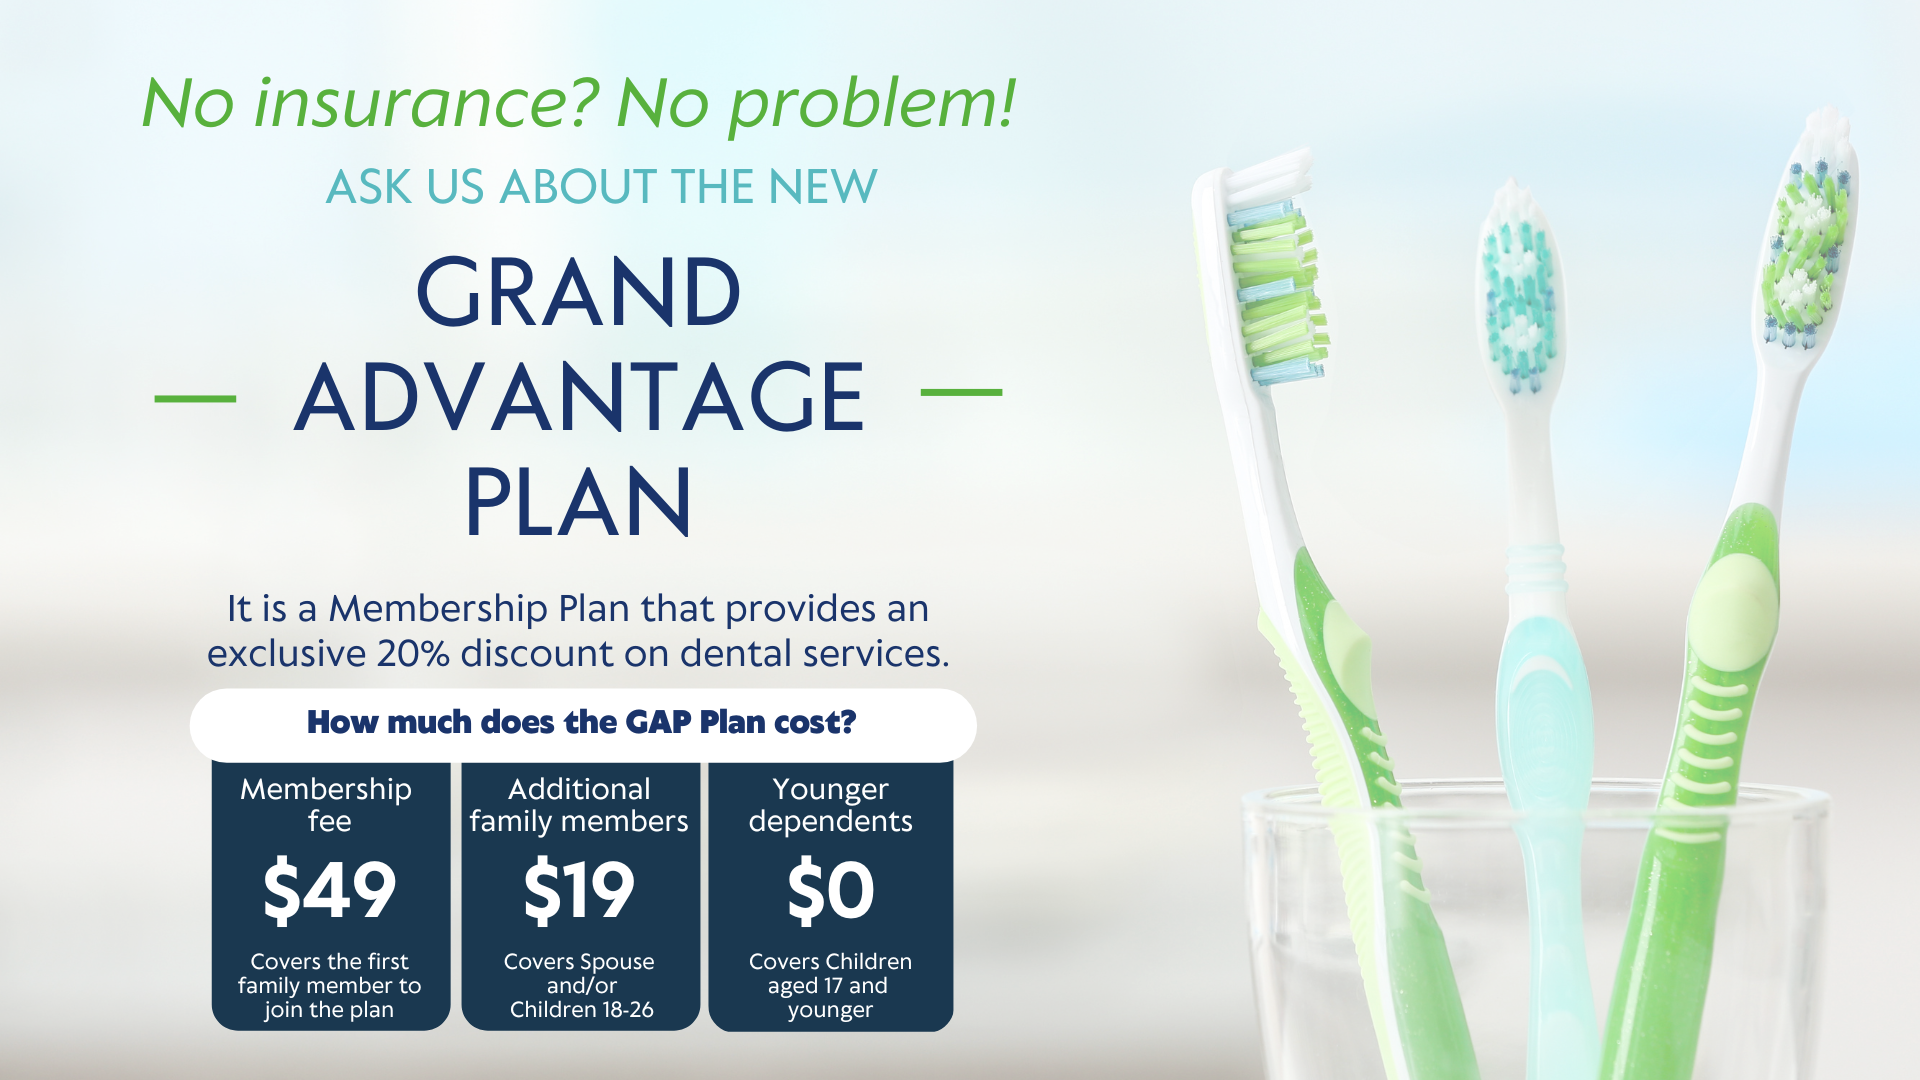 No insurance no problem ask us about the new Grand Advantage Plan